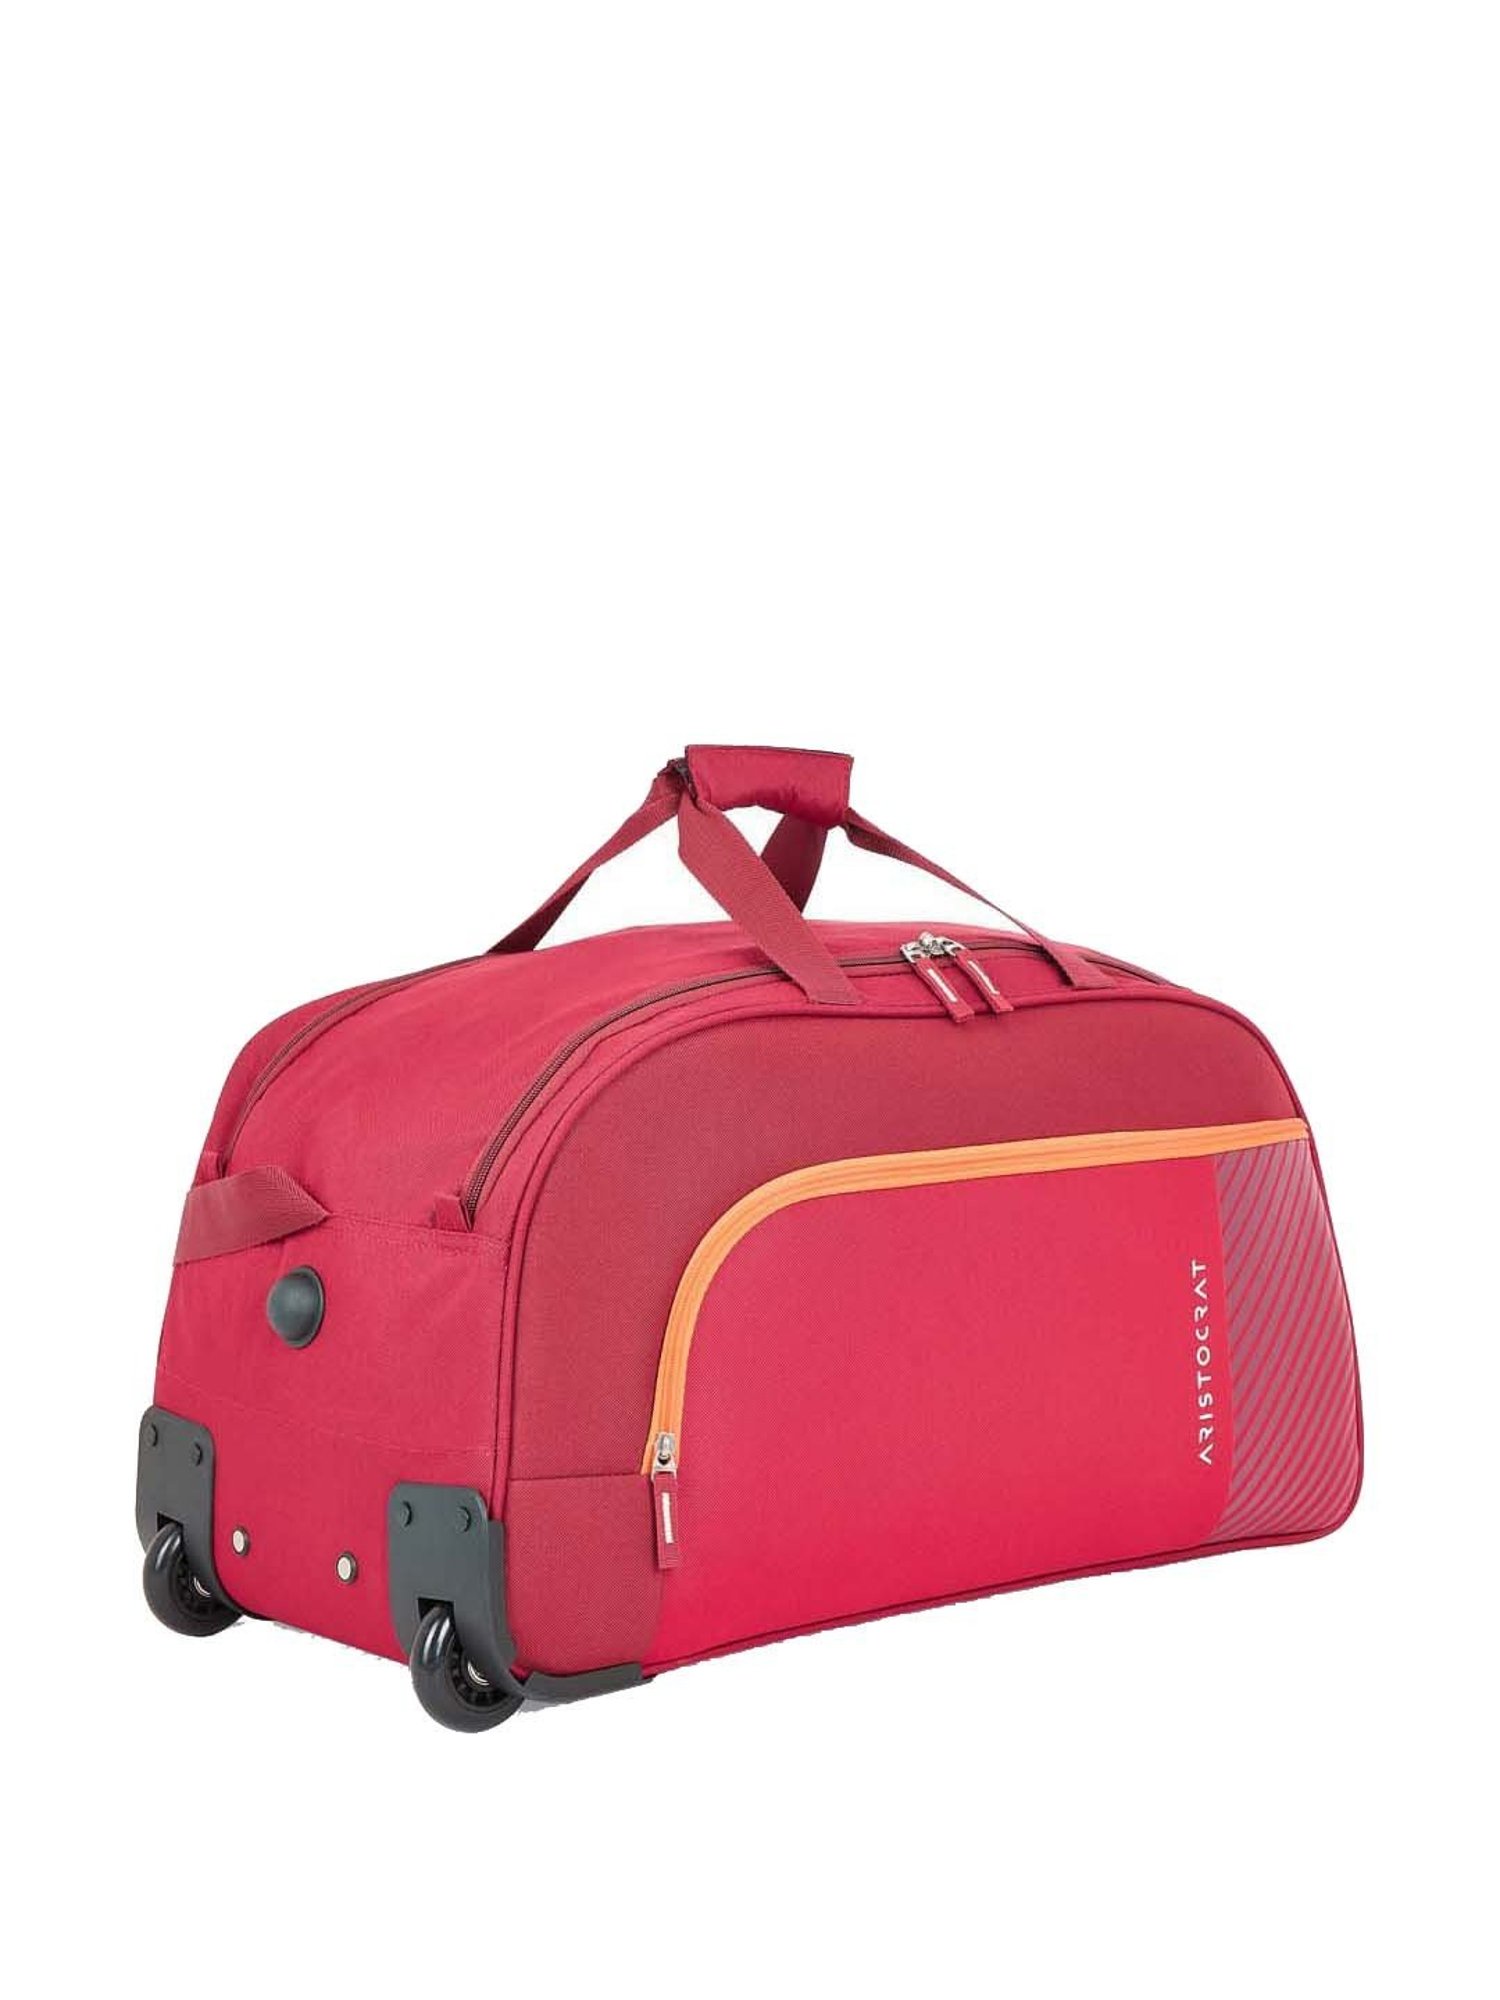 ARISTOCRAT Strolley Duffel Bag - Regular Capacity || Afforable trolley bag  from Flipkart review - YouTube